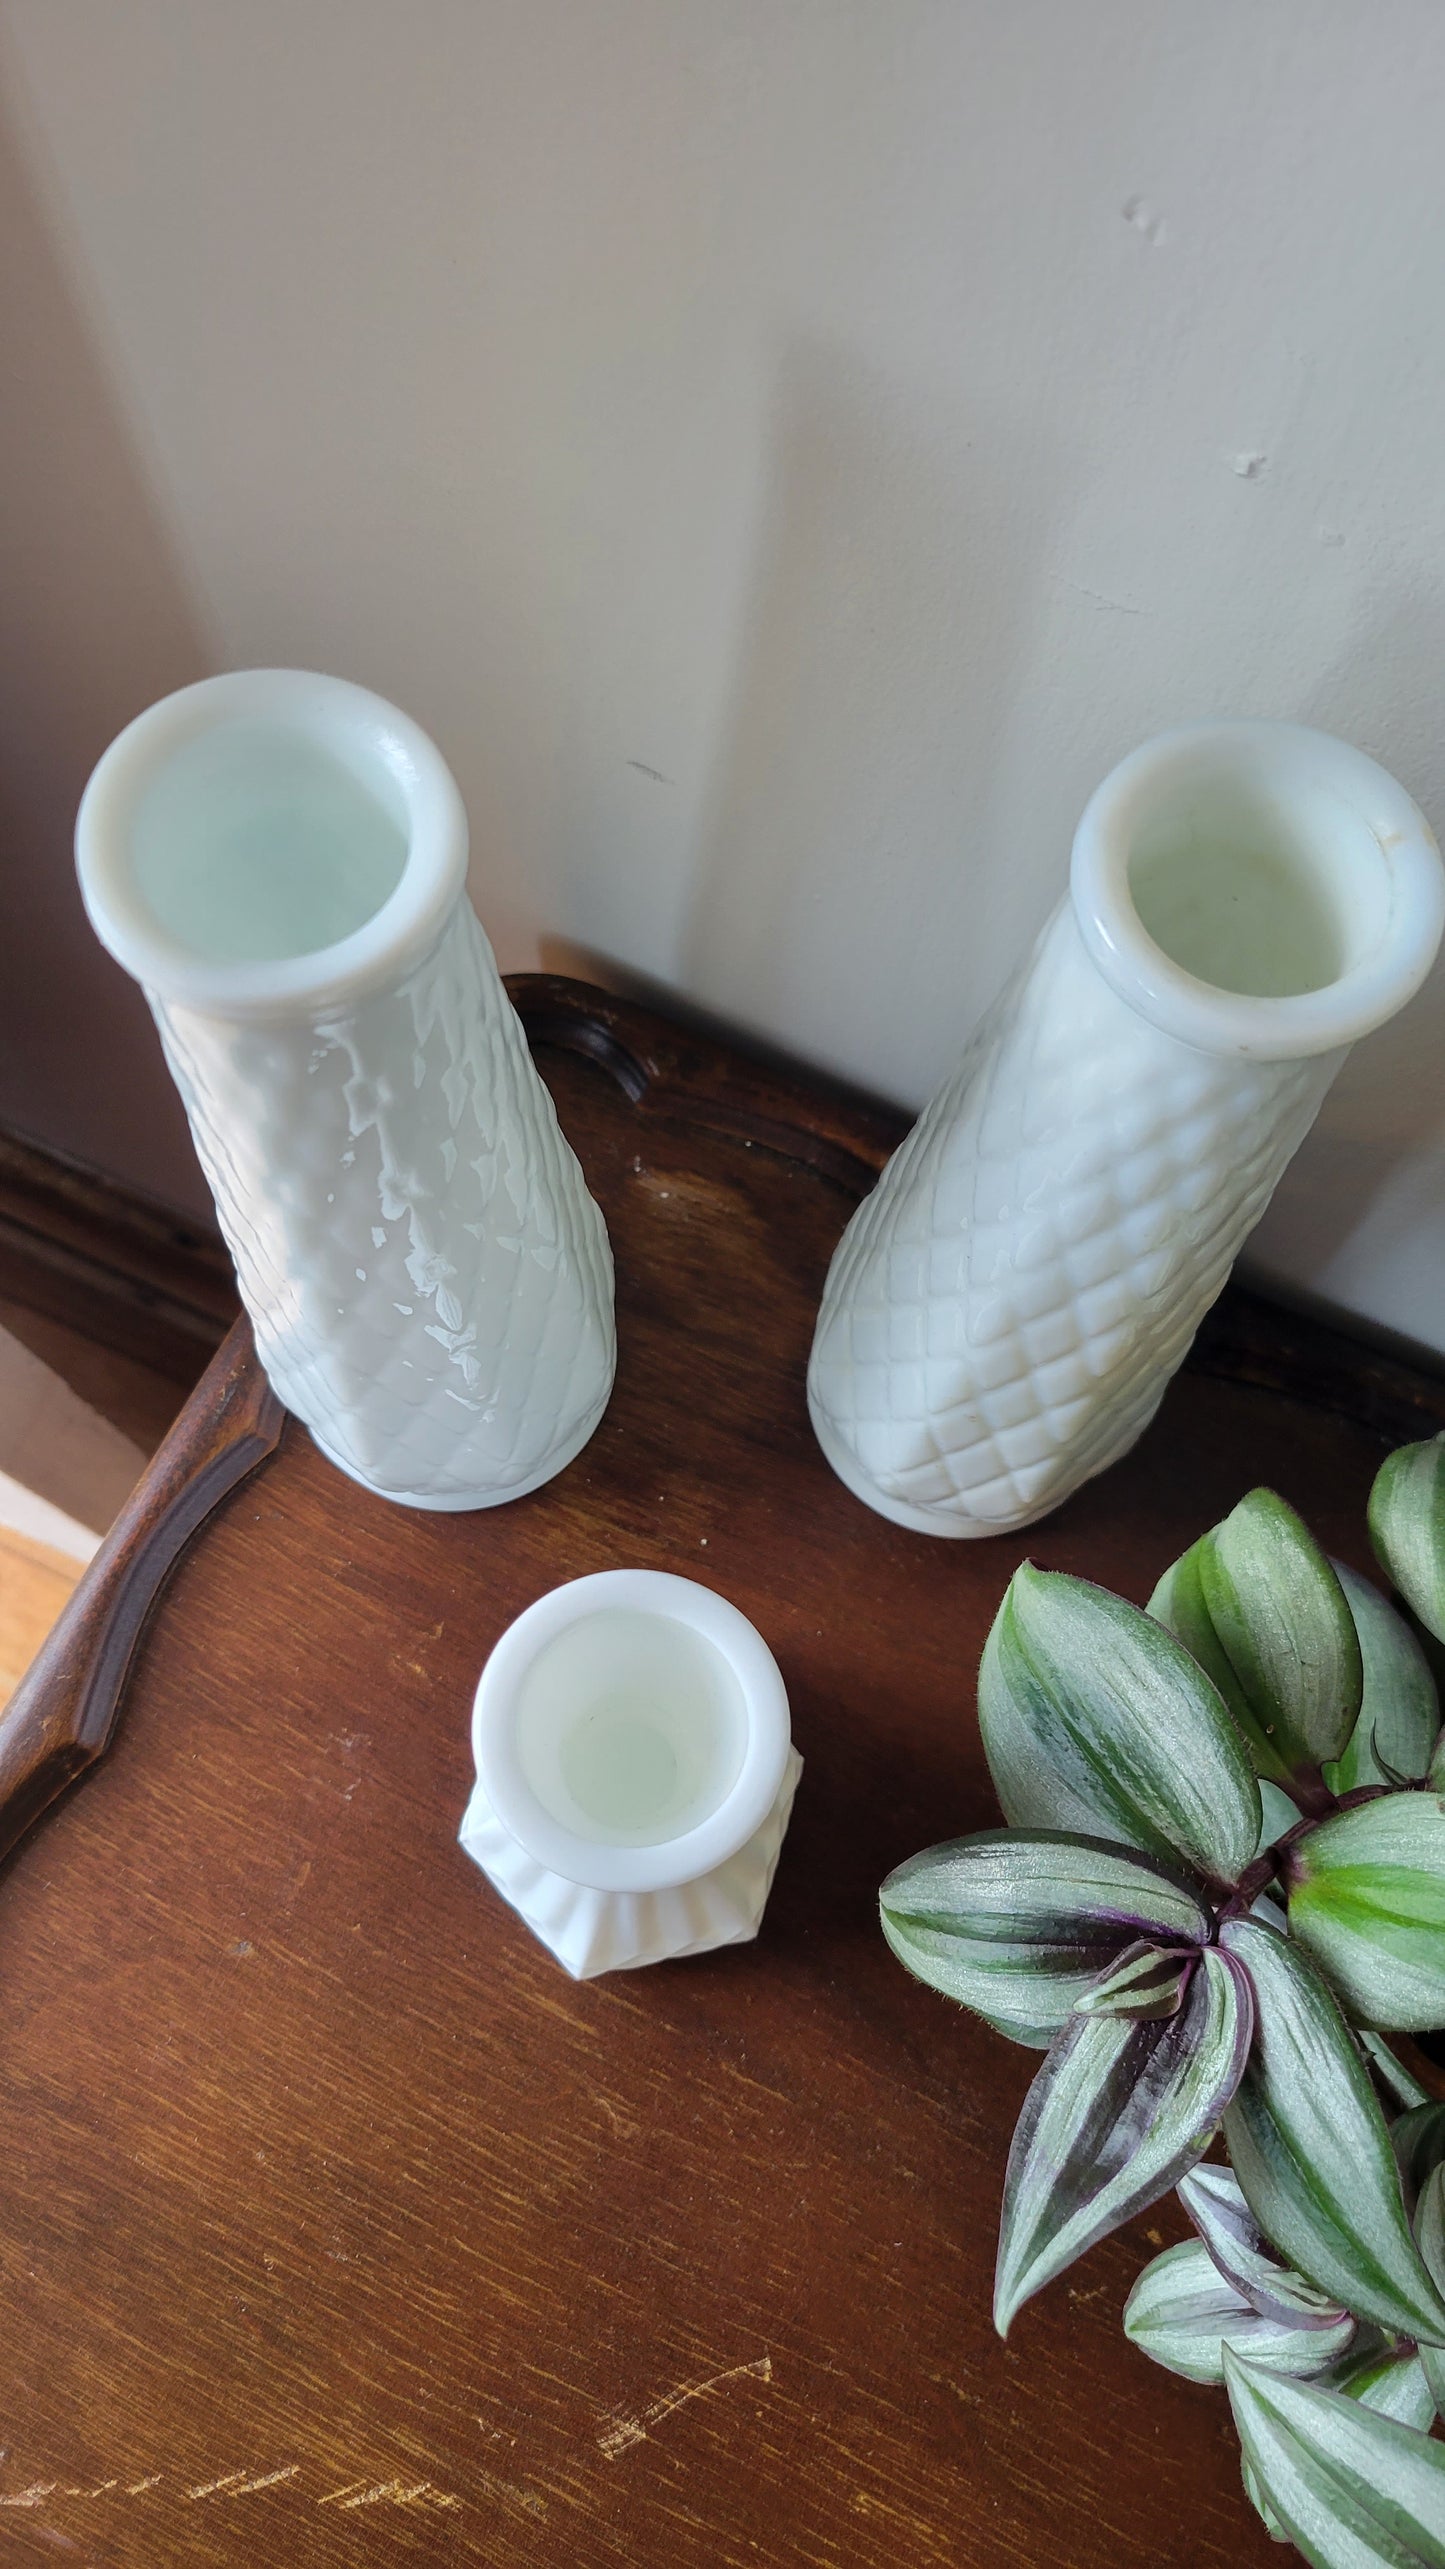 Milk glass vases